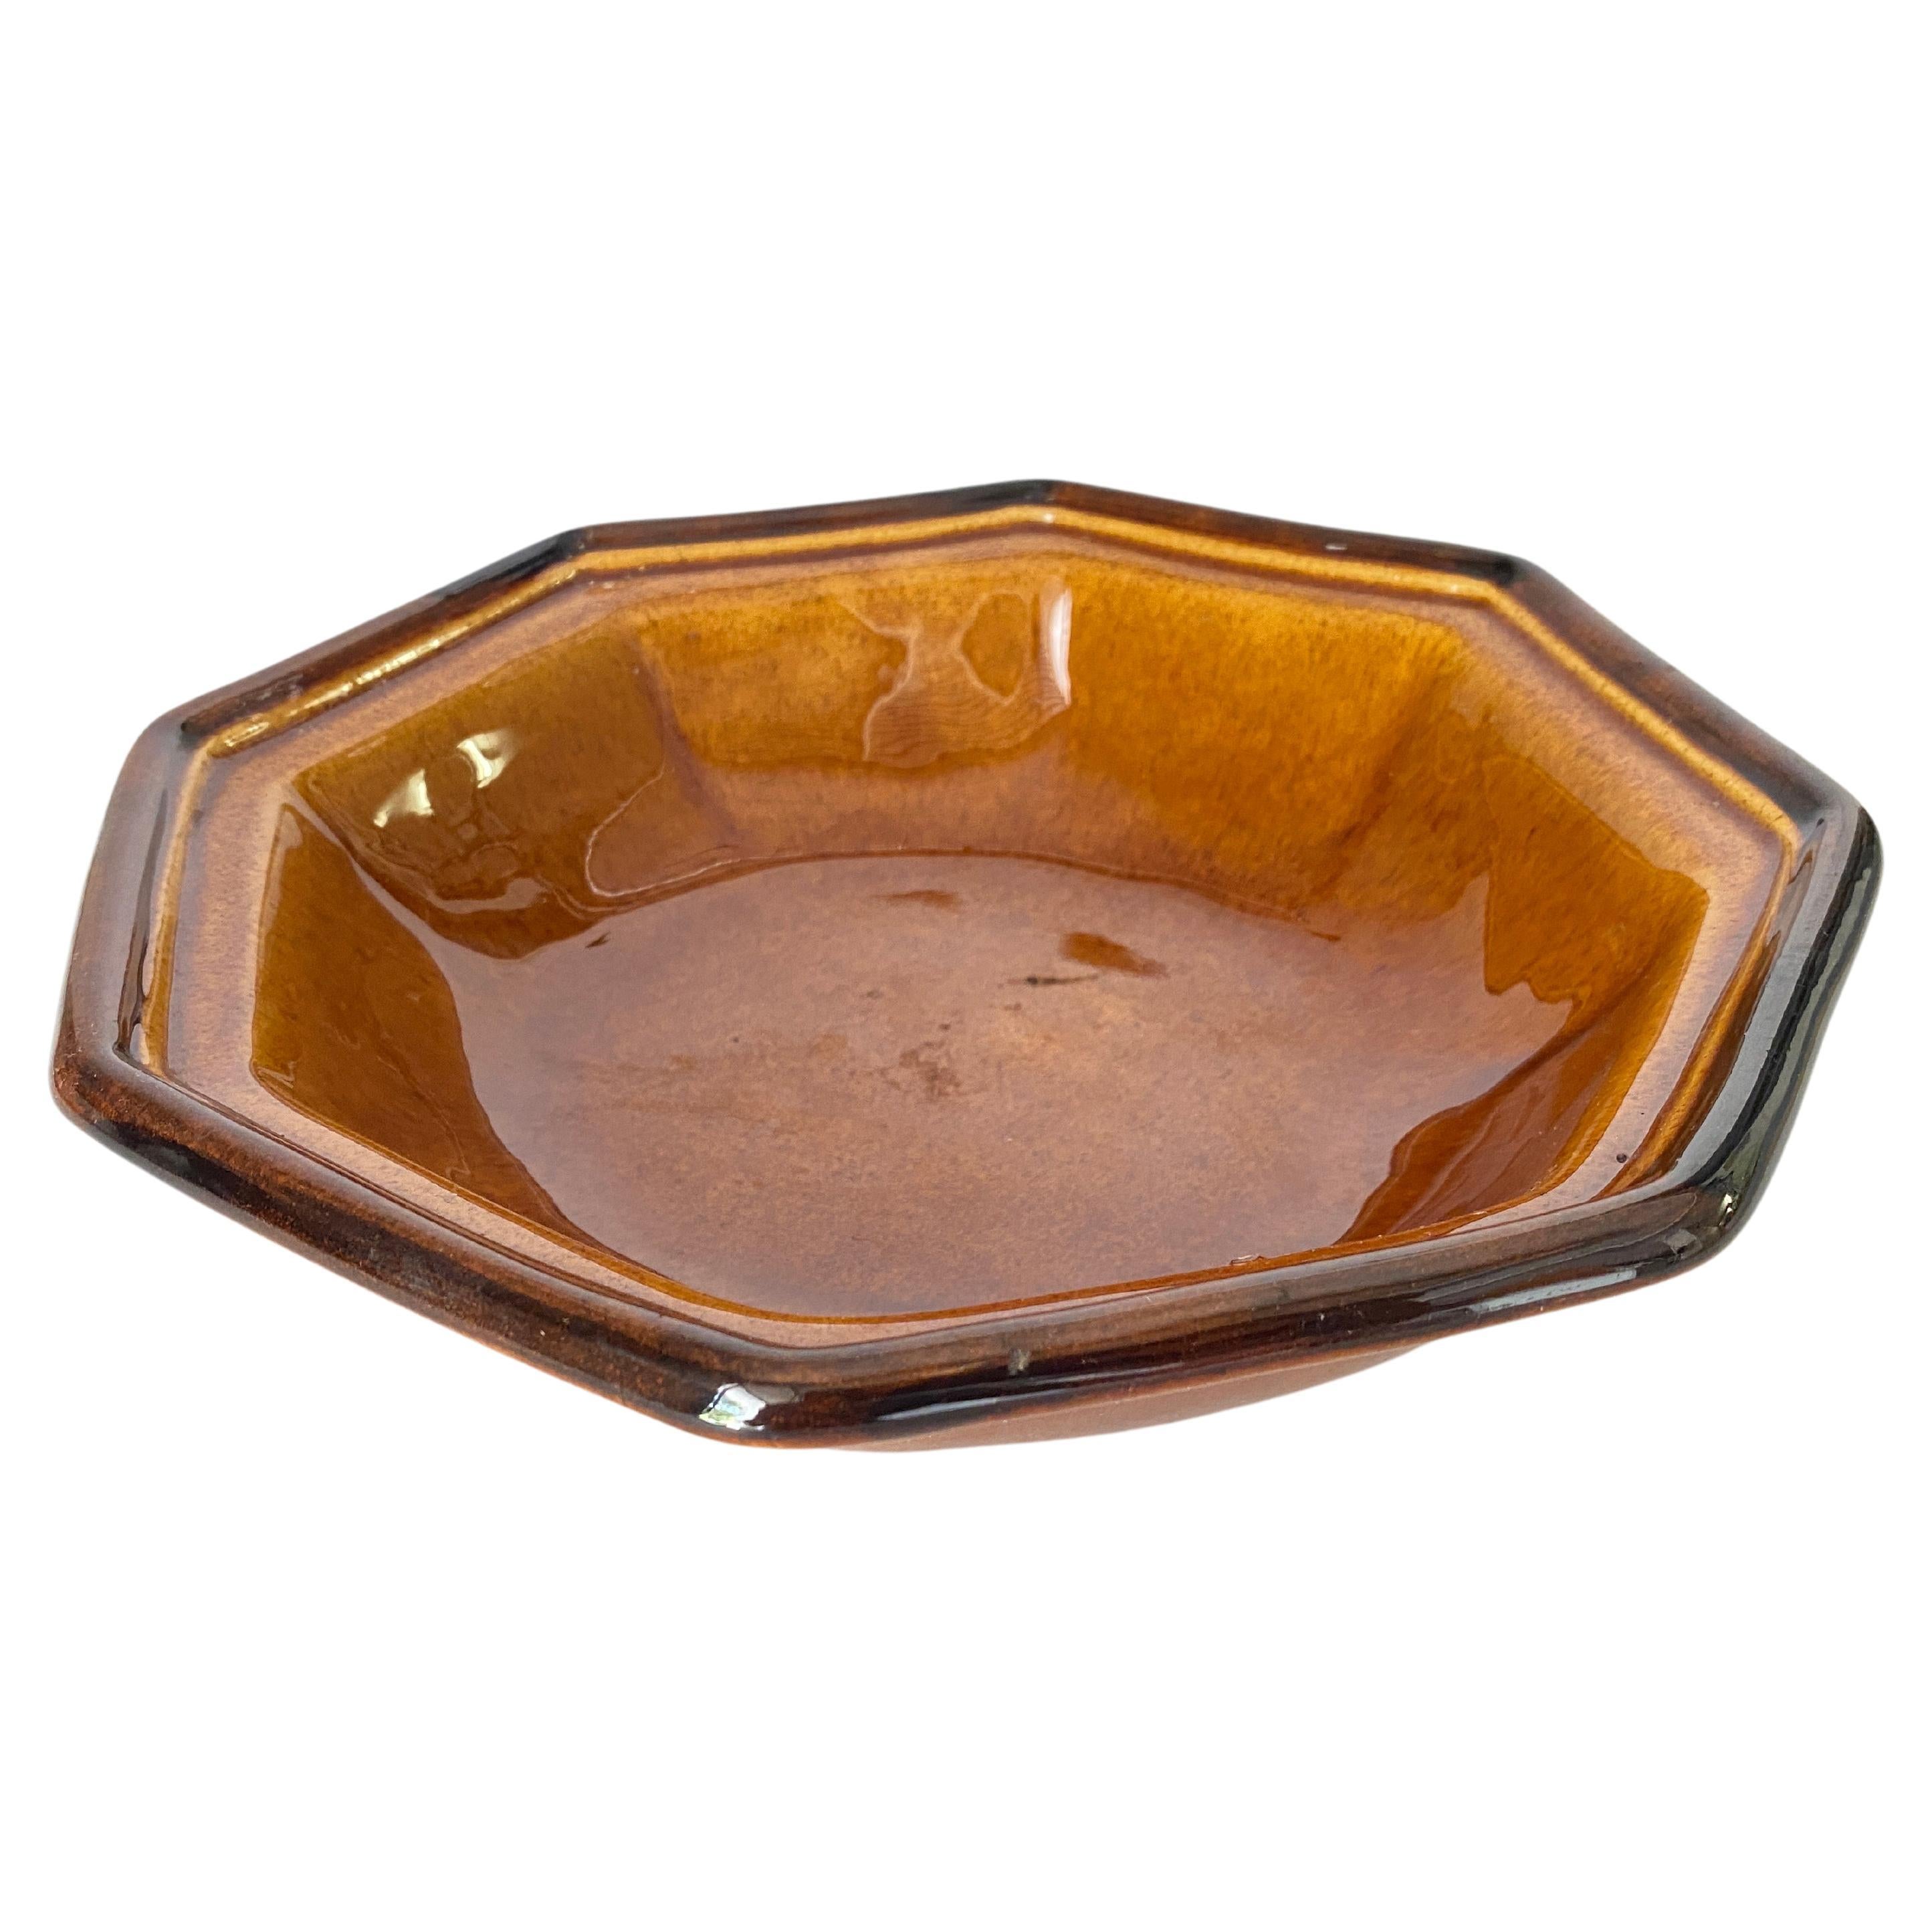 Vintage French Ceramic Fruit Bowl Table Centerpiece Brown color Circa 1960